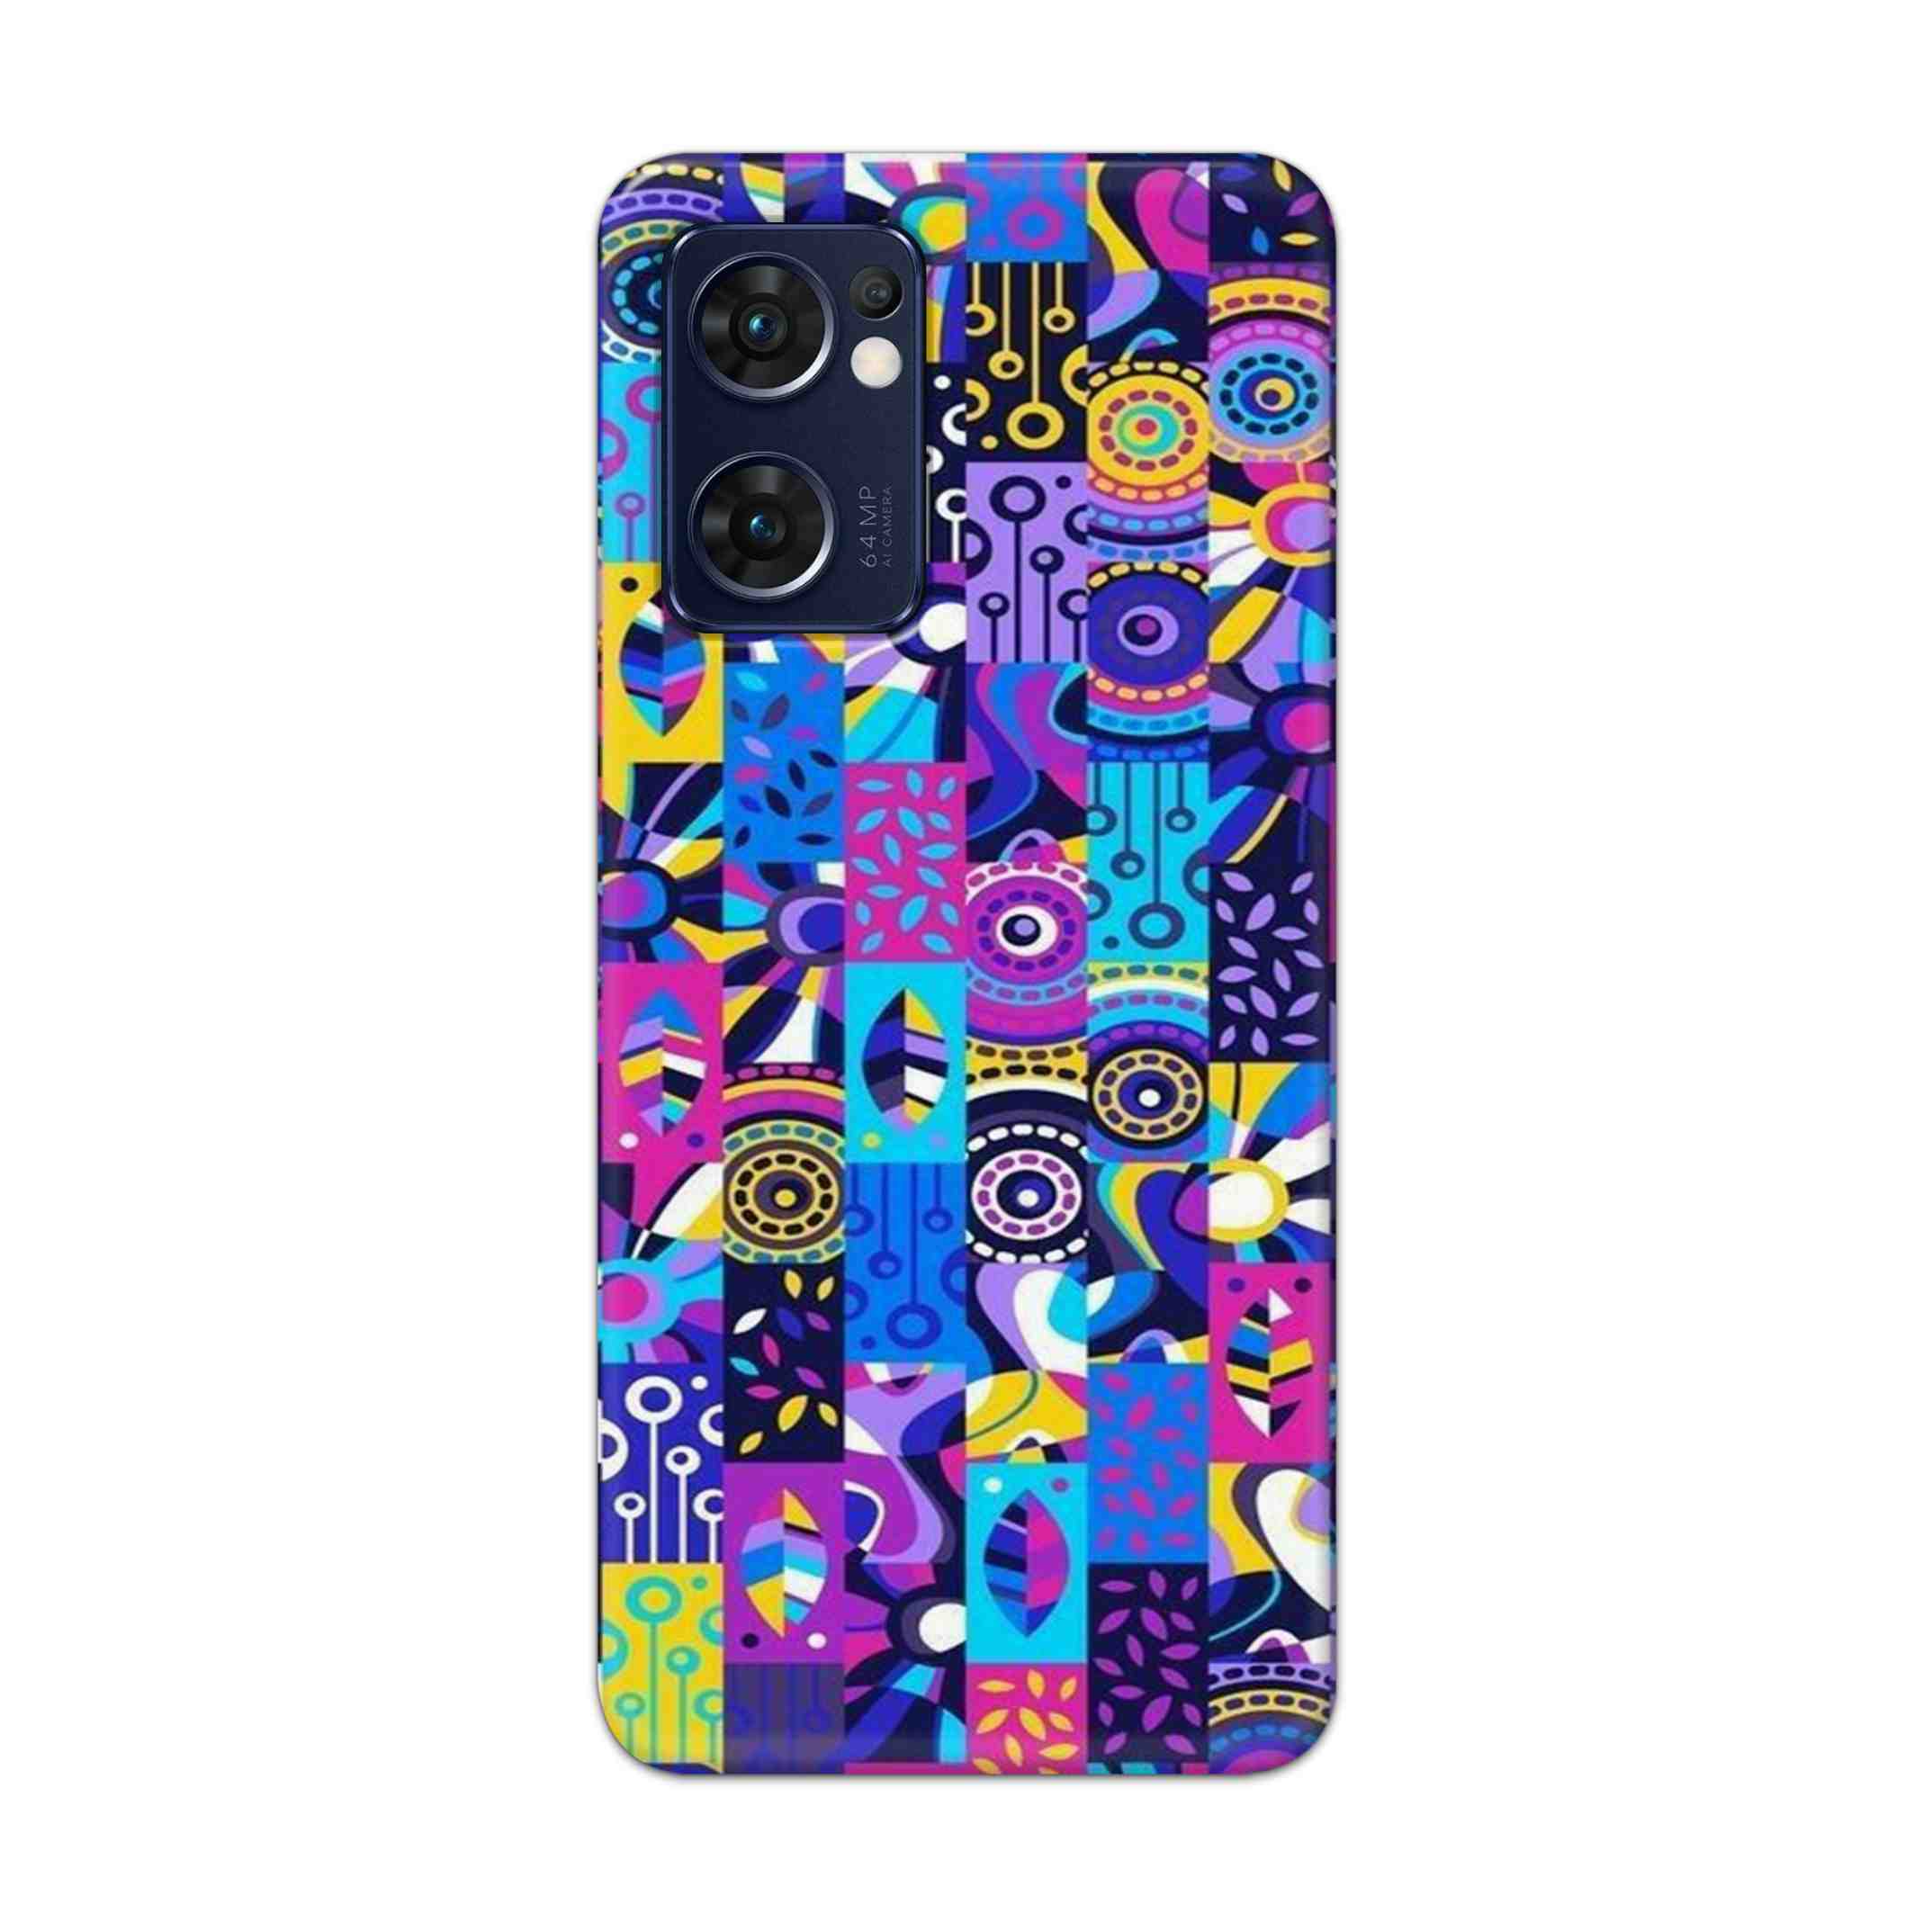 Buy Rainbow Art Hard Back Mobile Phone Case Cover For Reno 7 5G Online